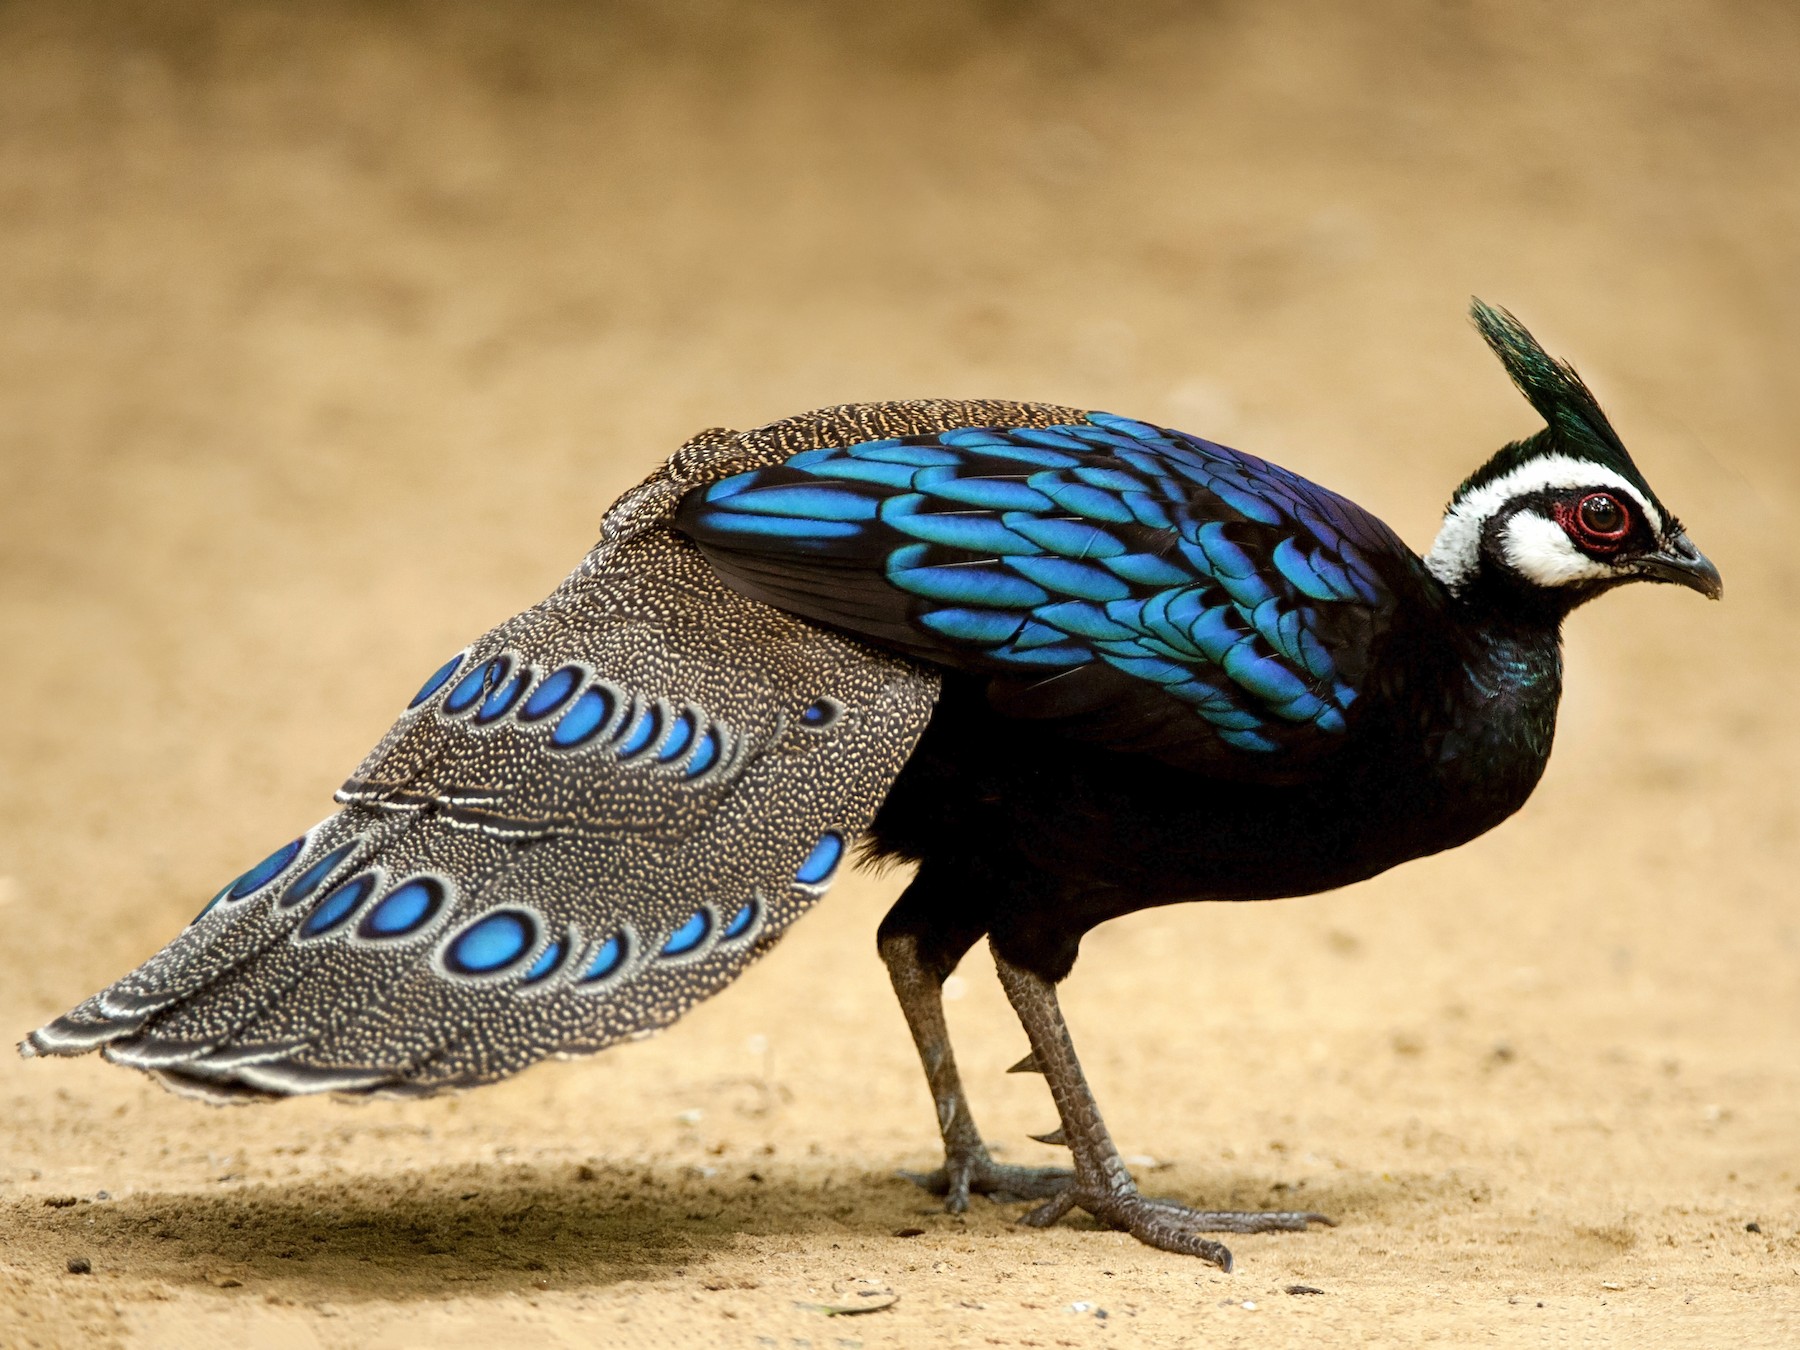 Palawan Peacock-Pheasant - Daniel López-Velasco | Ornis Birding Expeditions